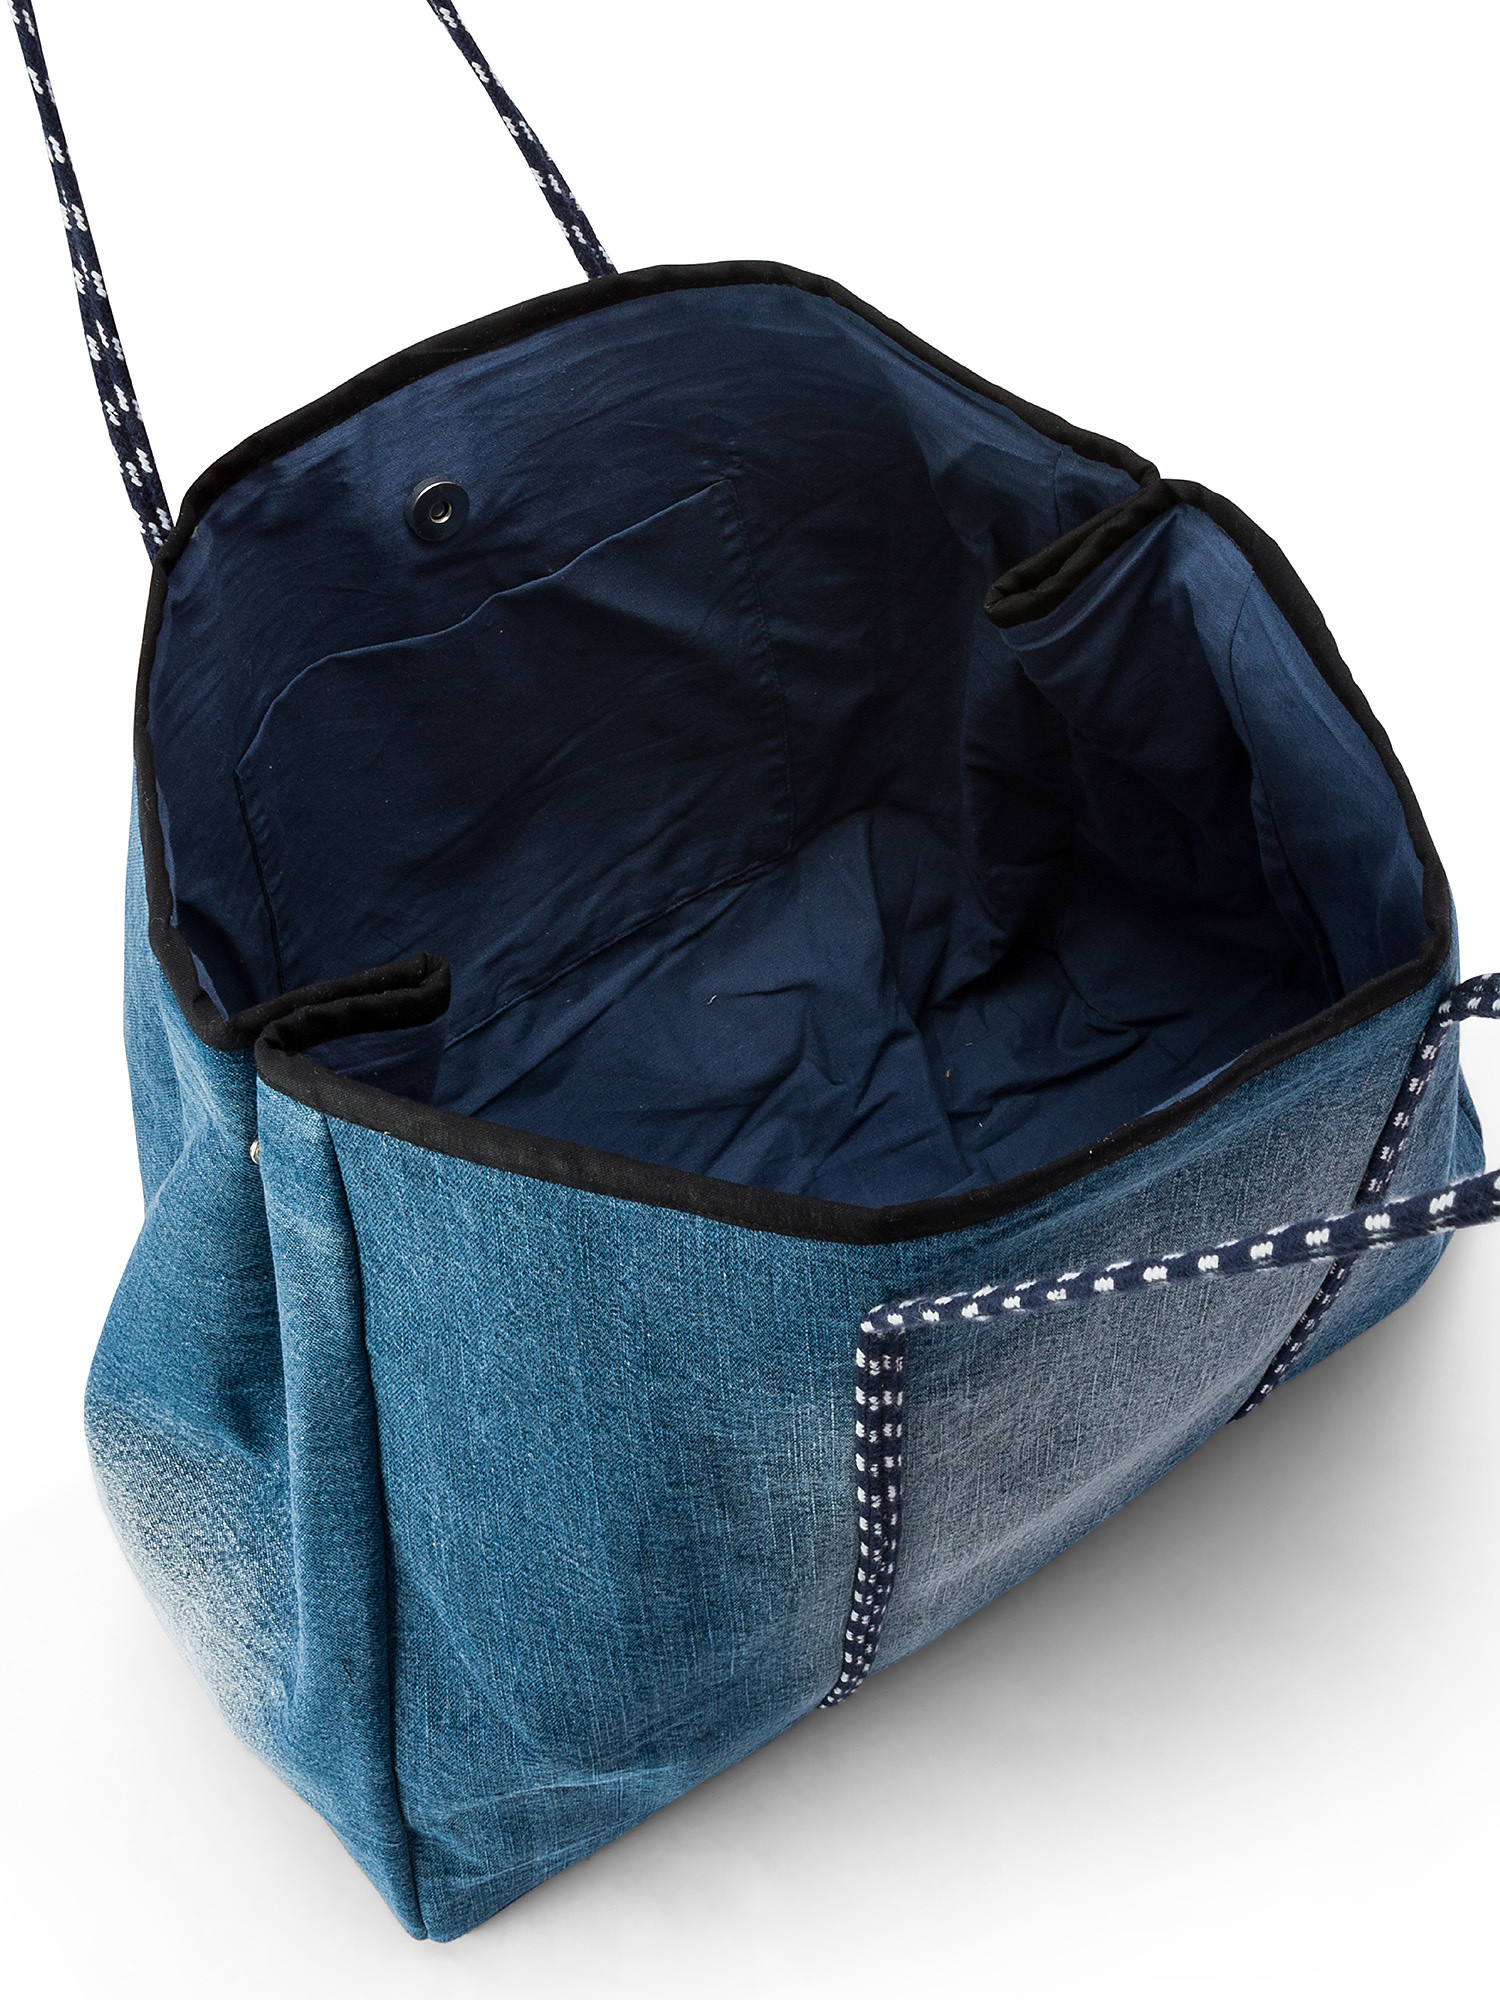 Shopping bag denim di cotone, Azzurro, large